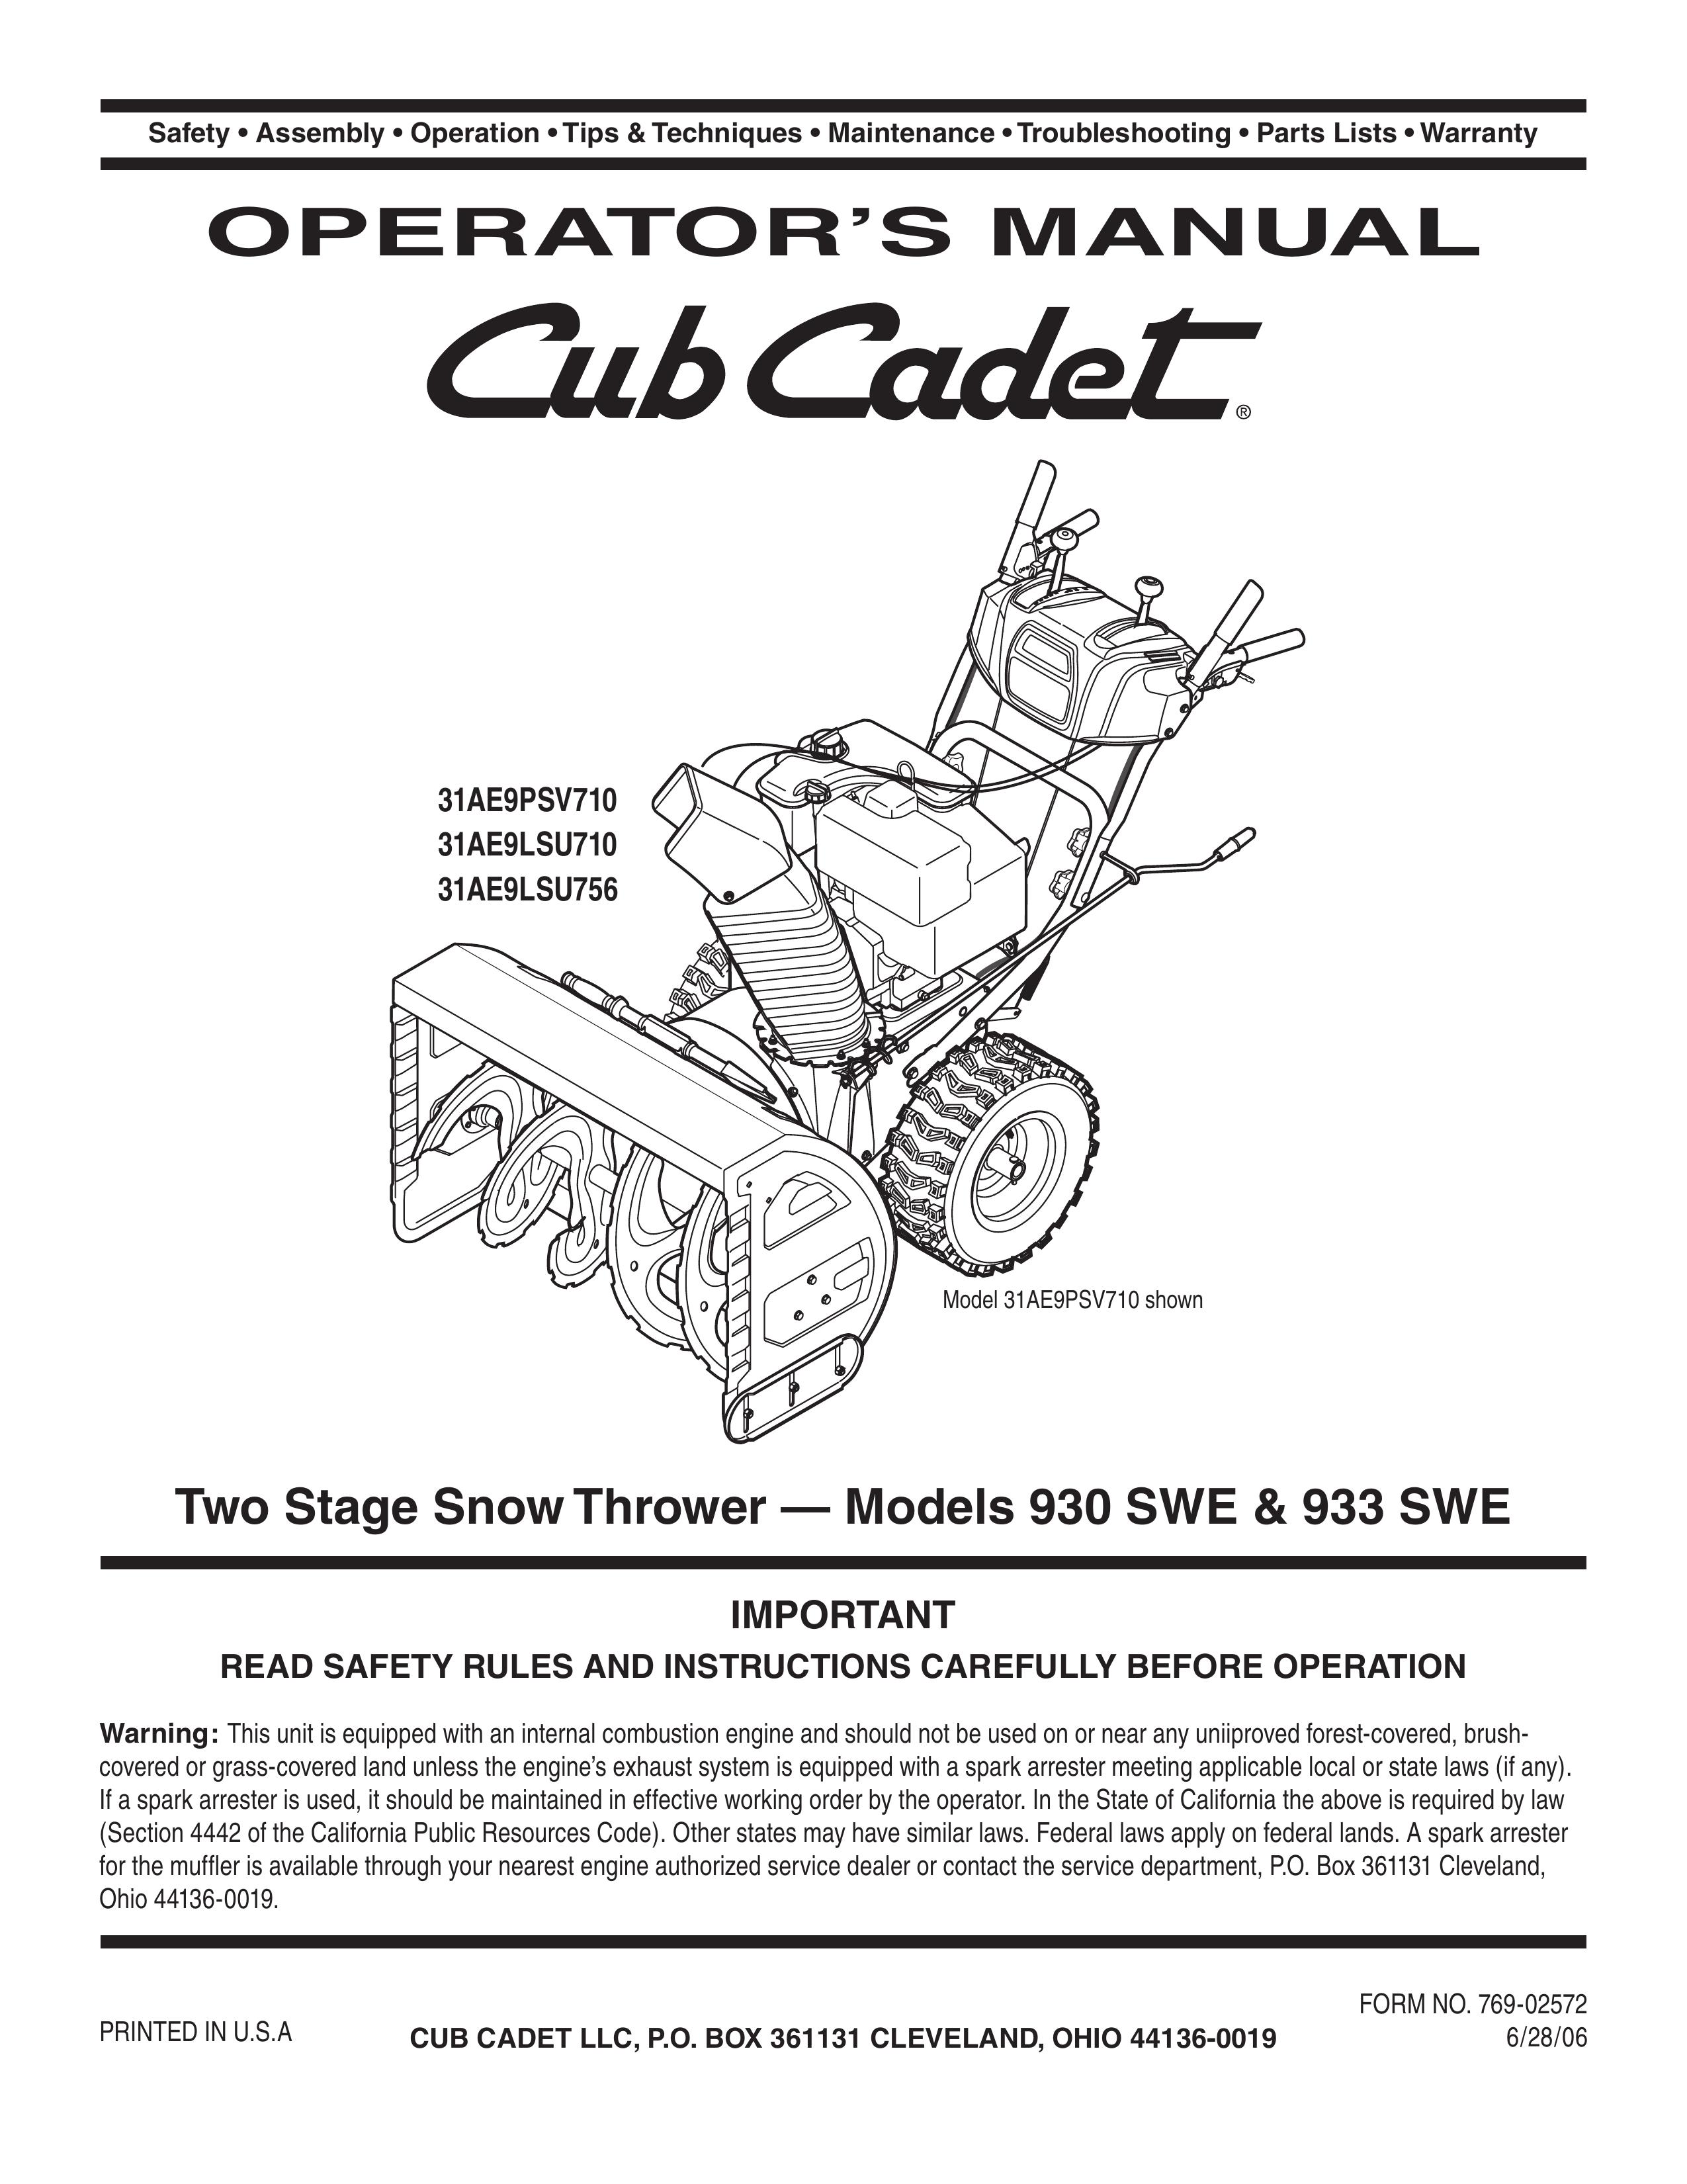 Cub Cadet 933 SWE Snow Blower User Manual